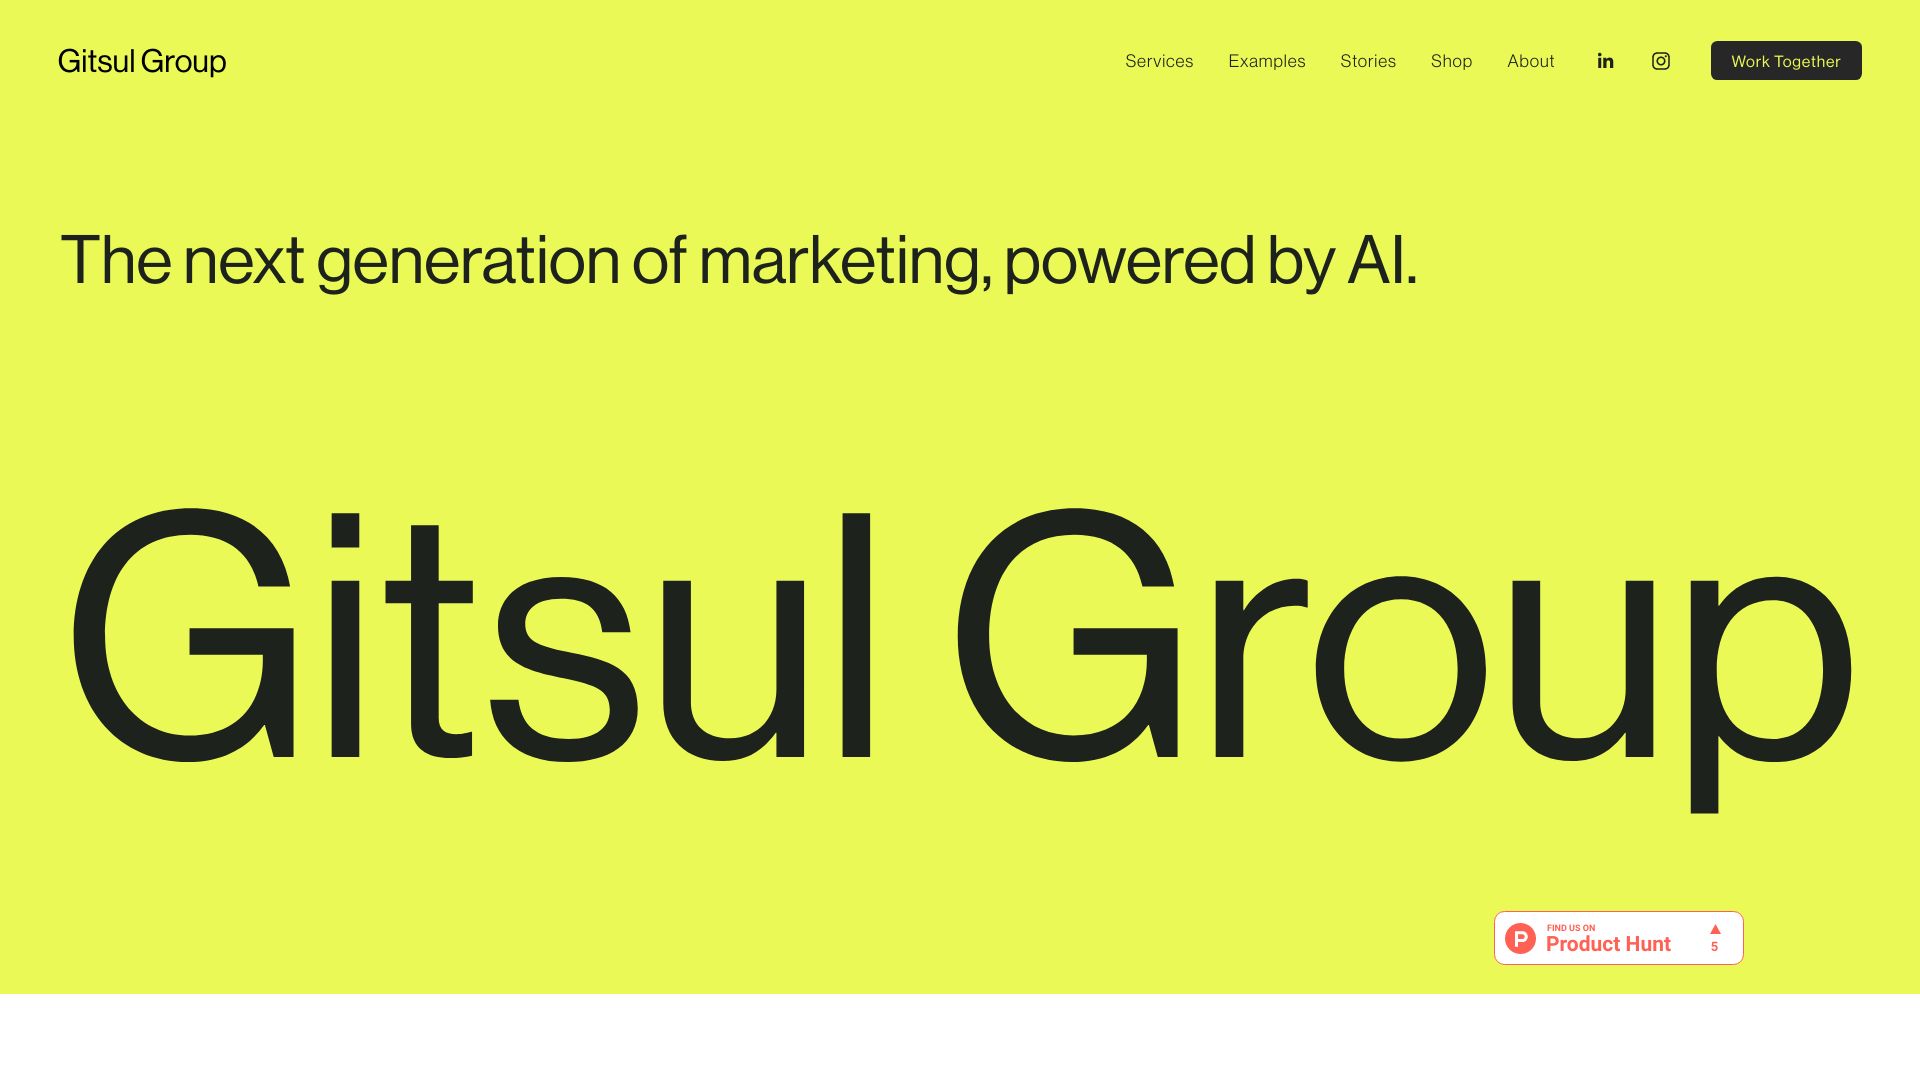 Gitsul Group